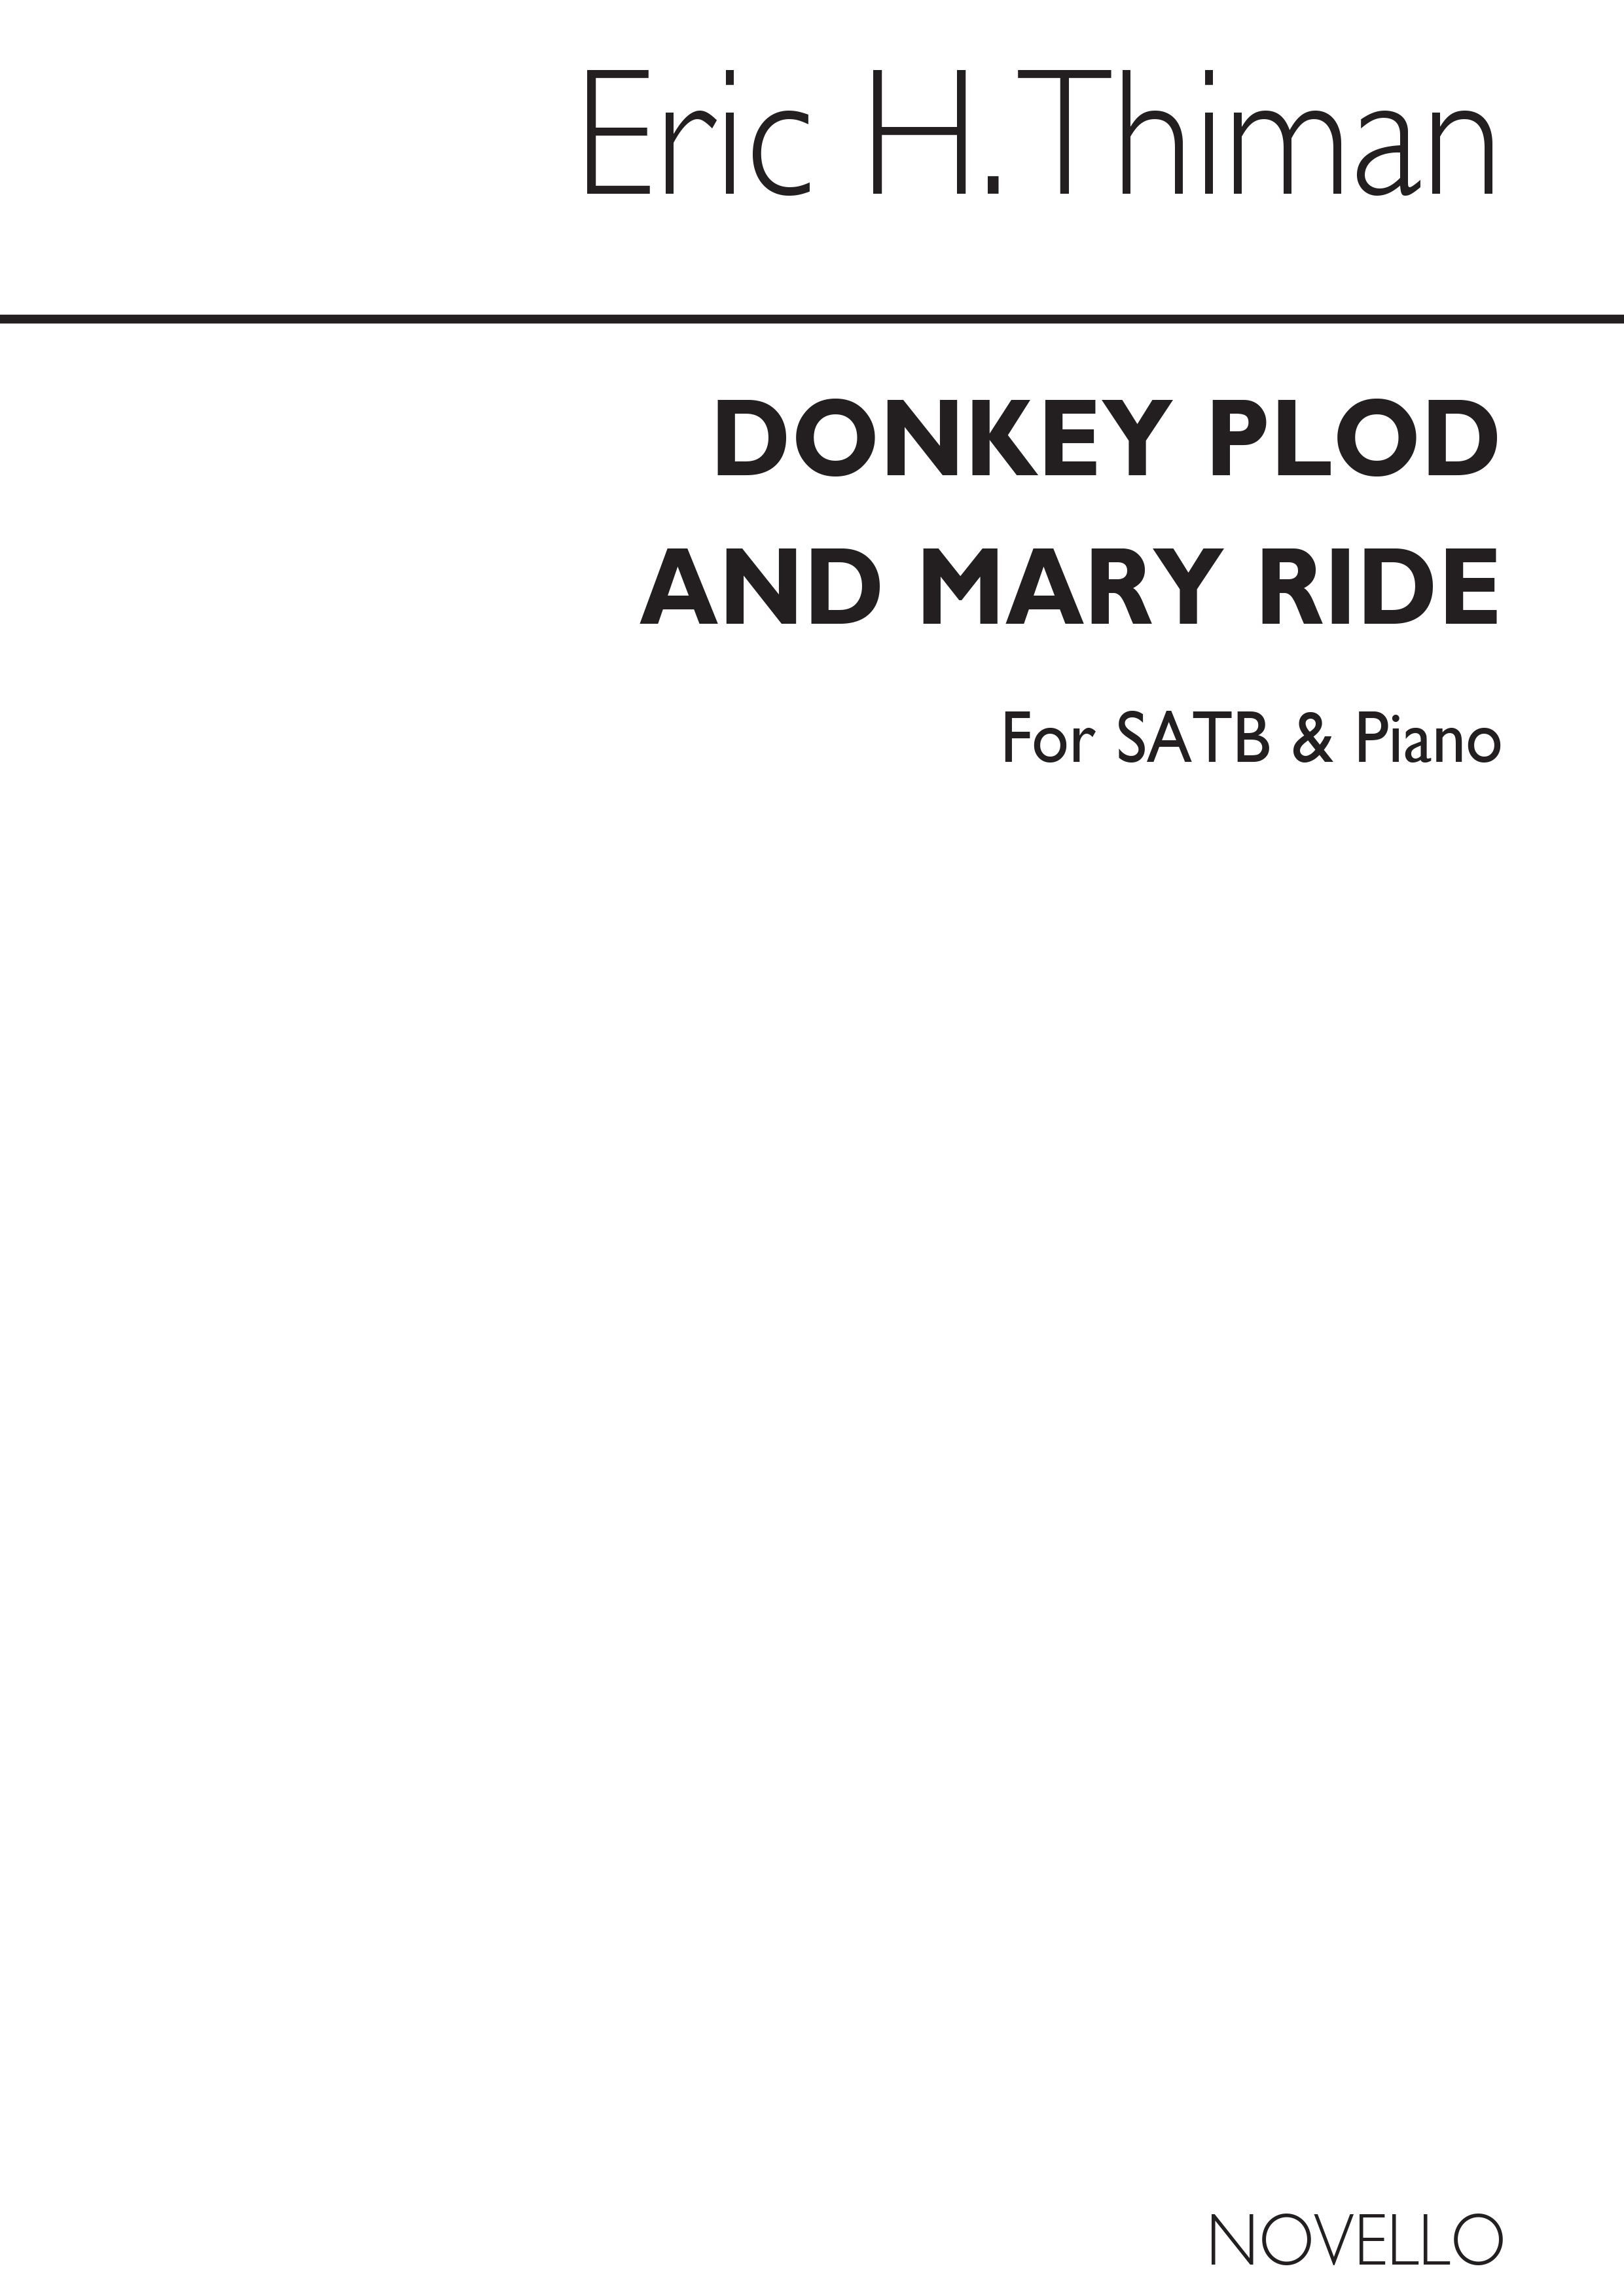 Eric Thiman: Donkey Plod And Mary Ride